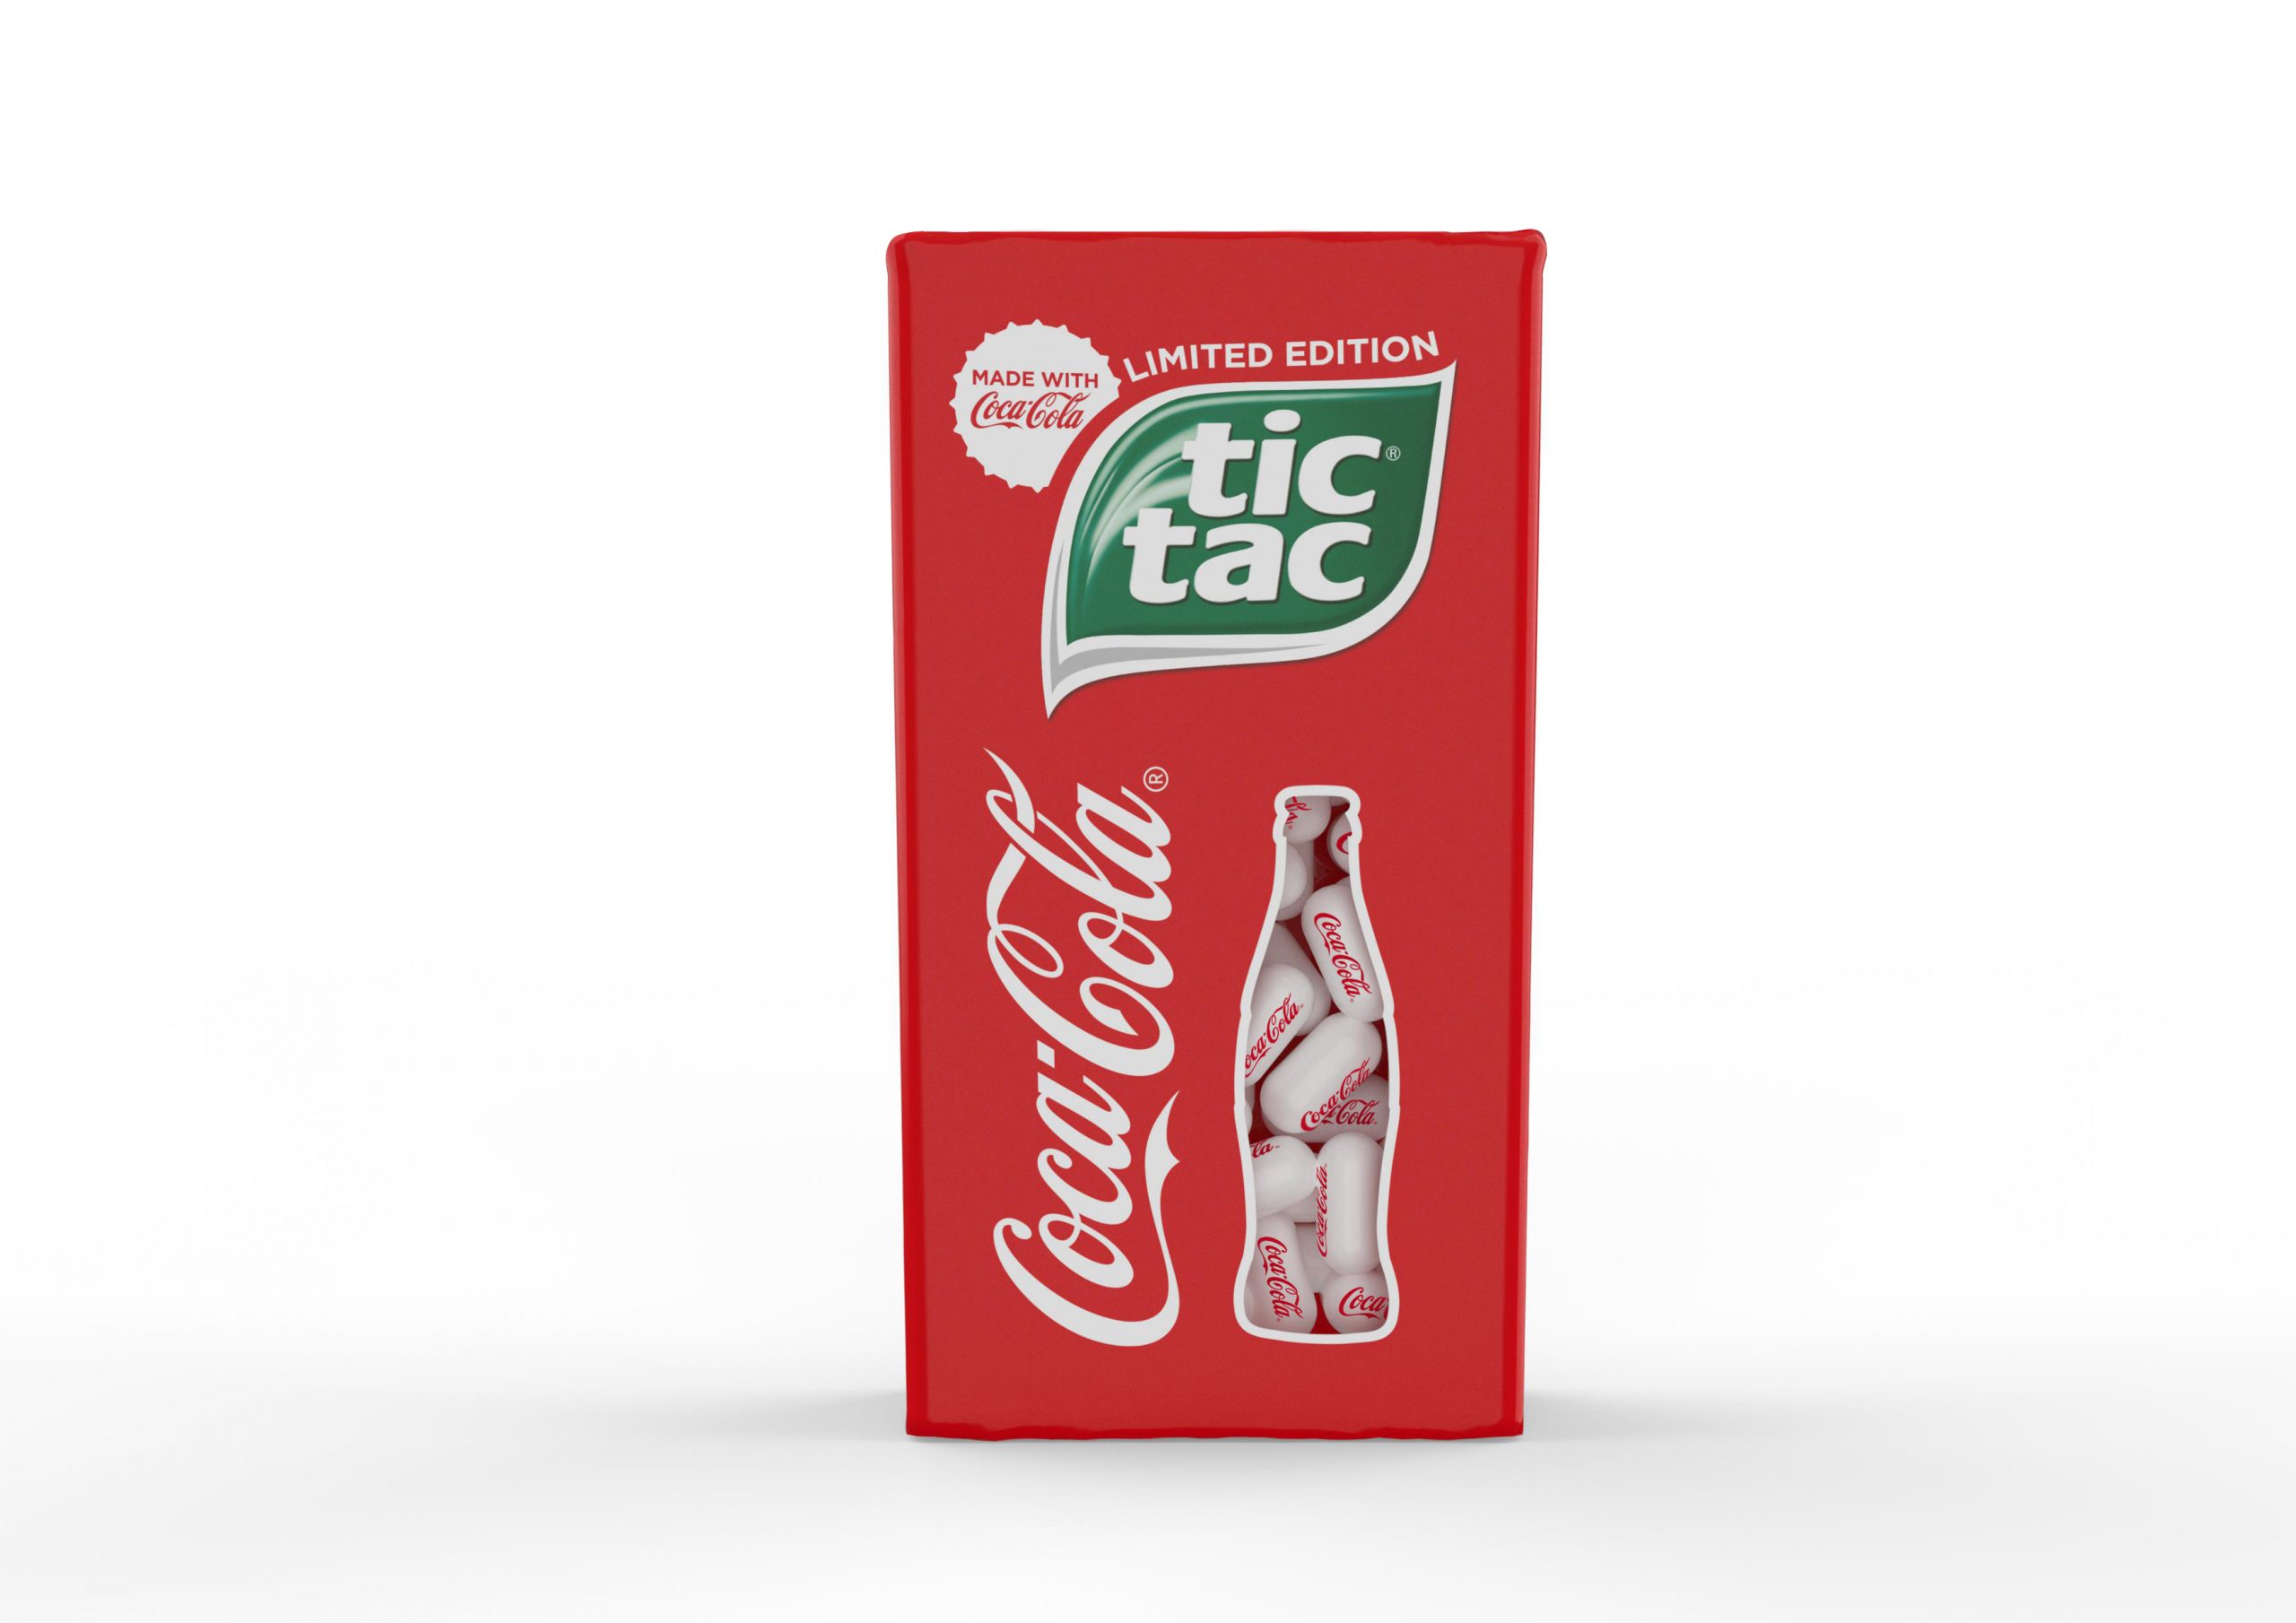 Ferrero UK brings back limited edition Tic Tac Coca-Cola this summer